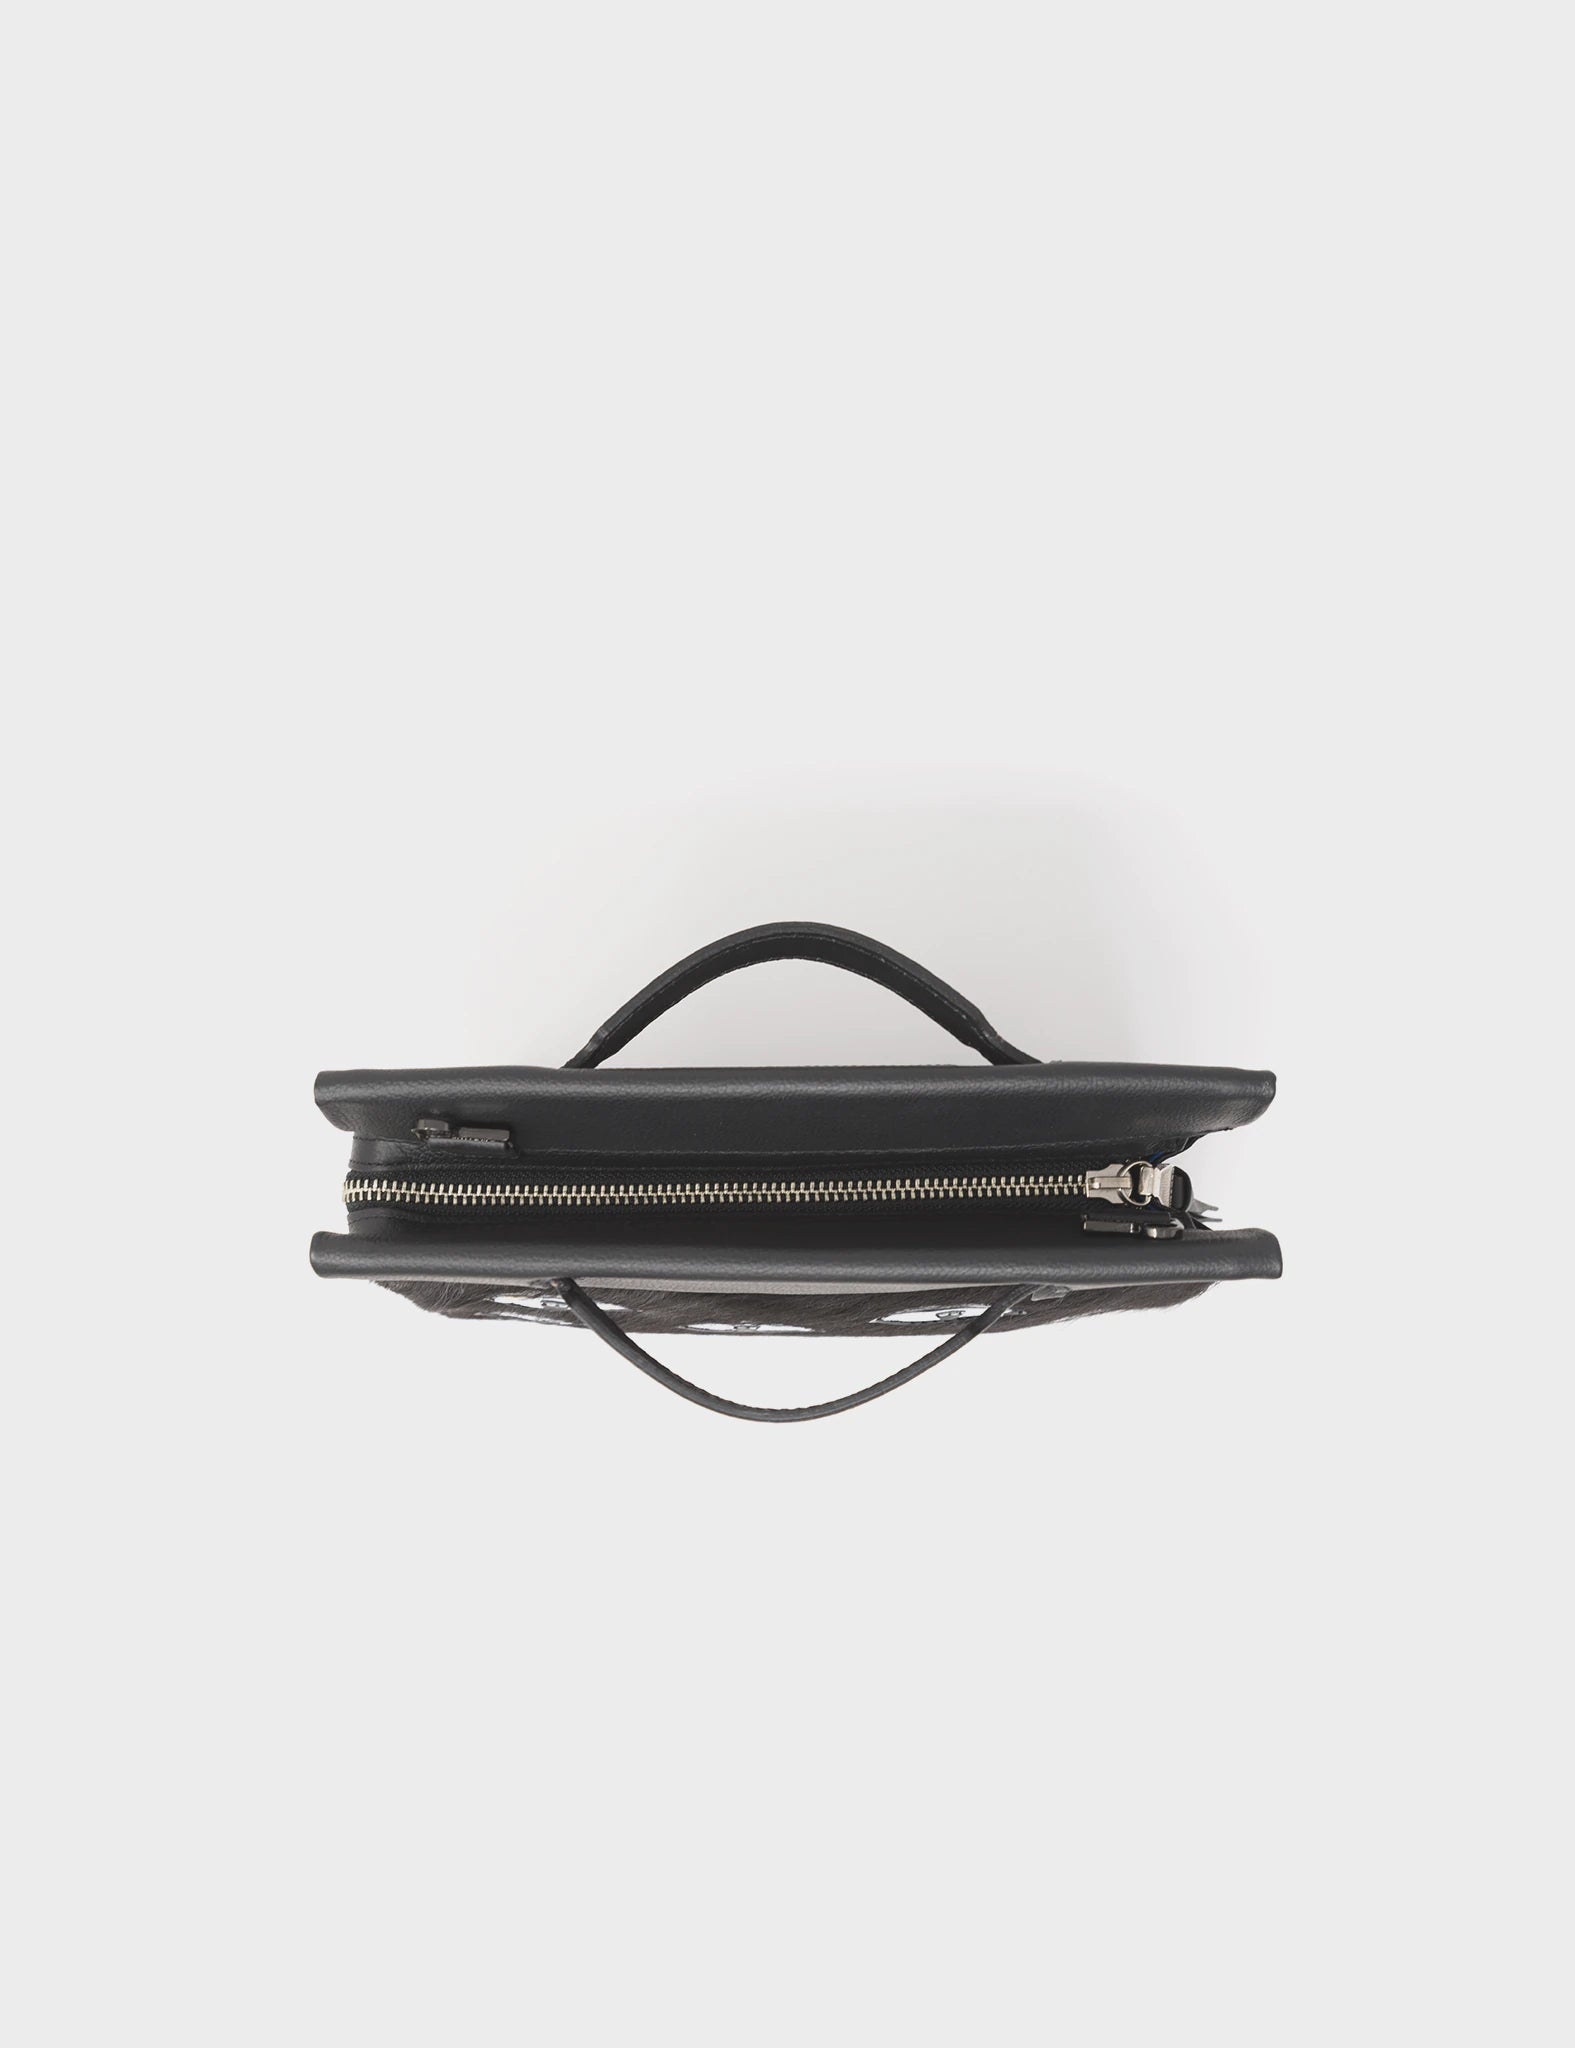 Vali Crossbody Small Black Leather Bag - Eyes Applique Adjustable Handle - Top view